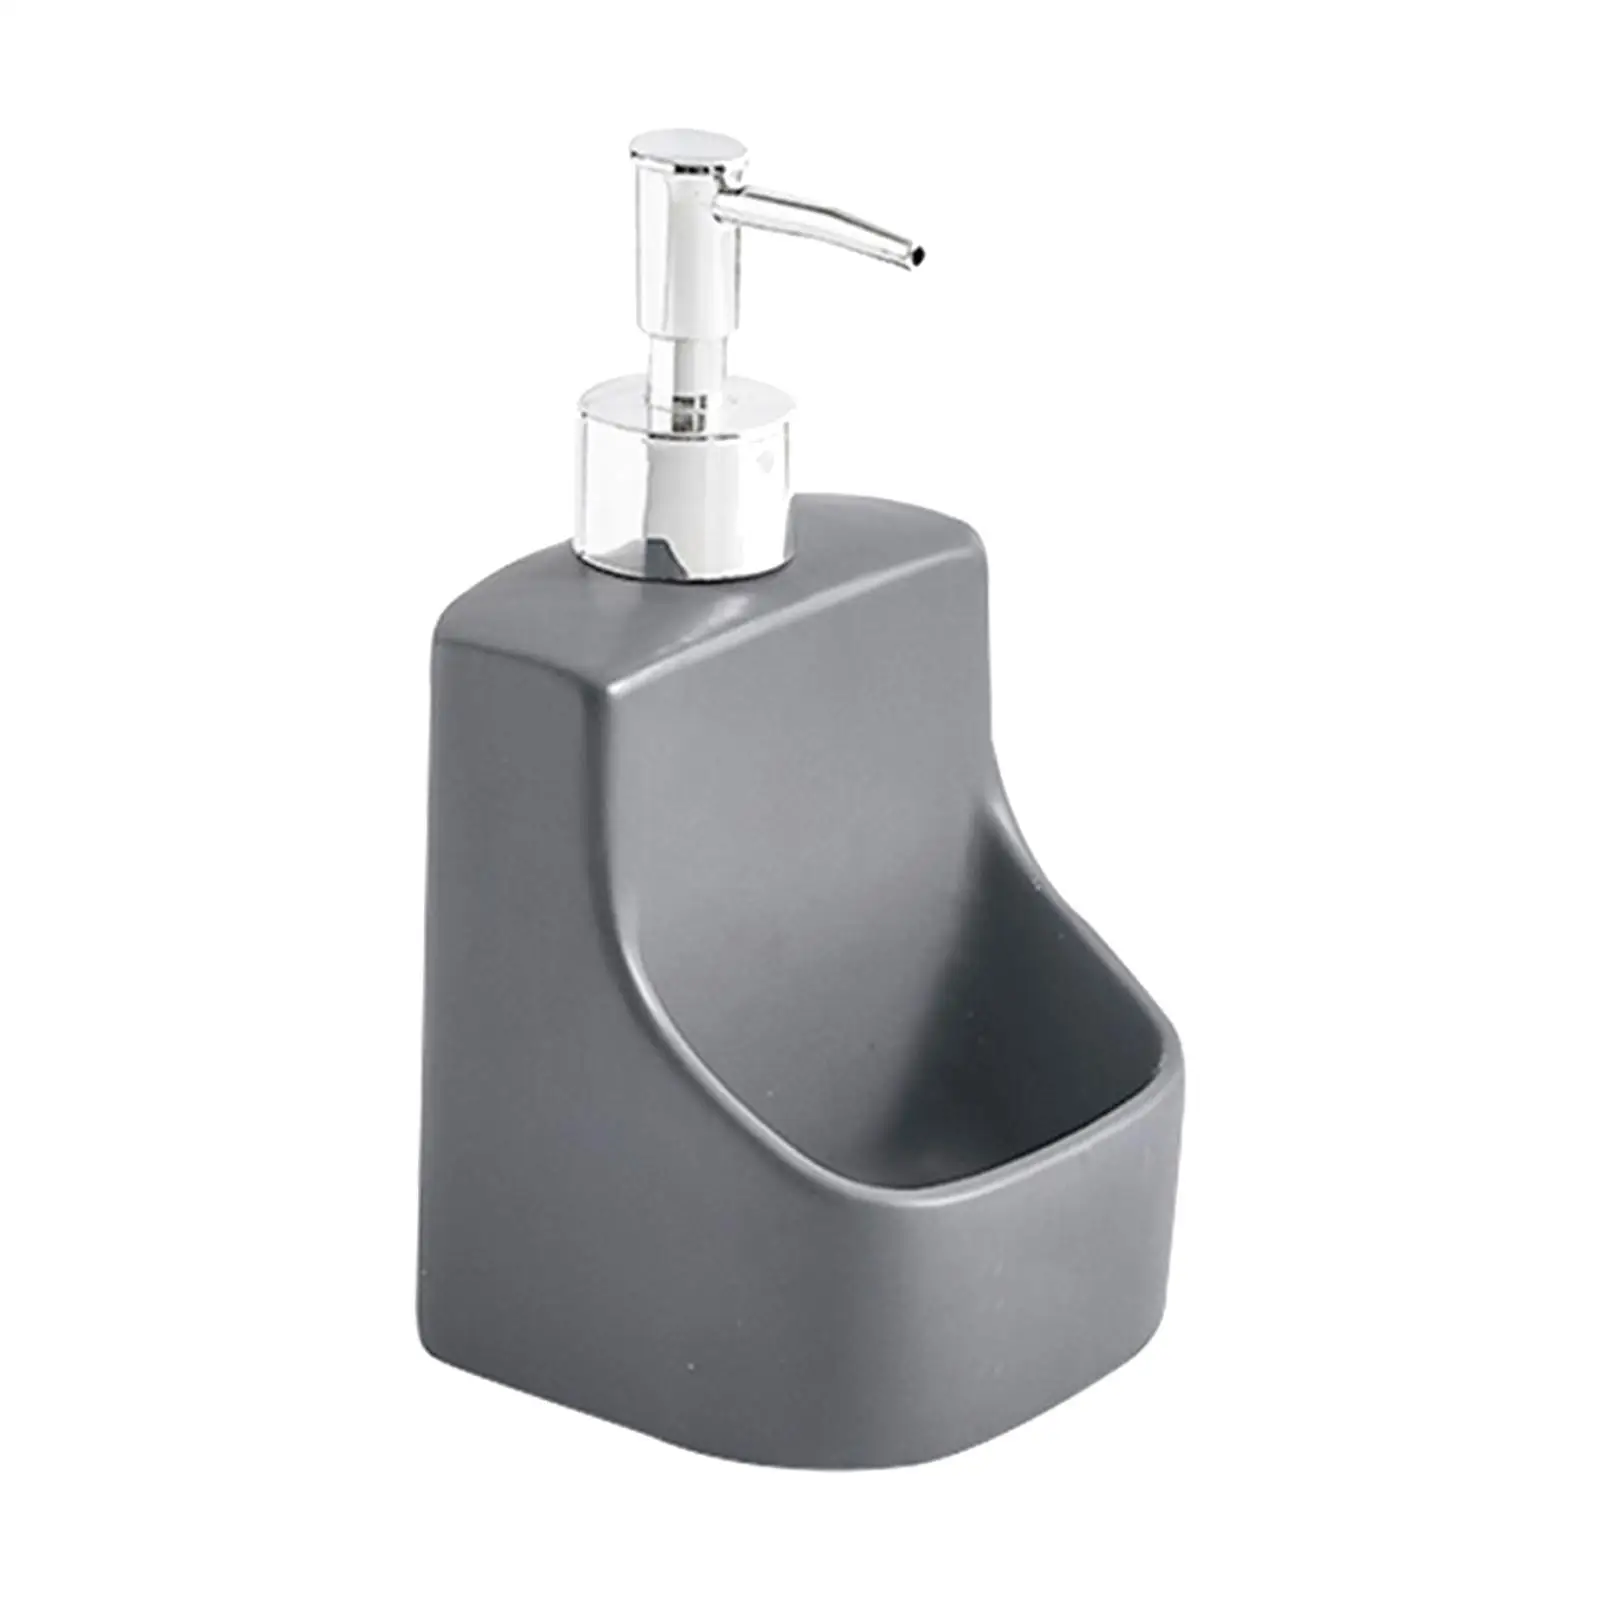 Hand Soap Dispenser Makeup Container Portable Multifunctional Holder Liquid Pump Bottle for Countertop Travel Hotel Mouthwash